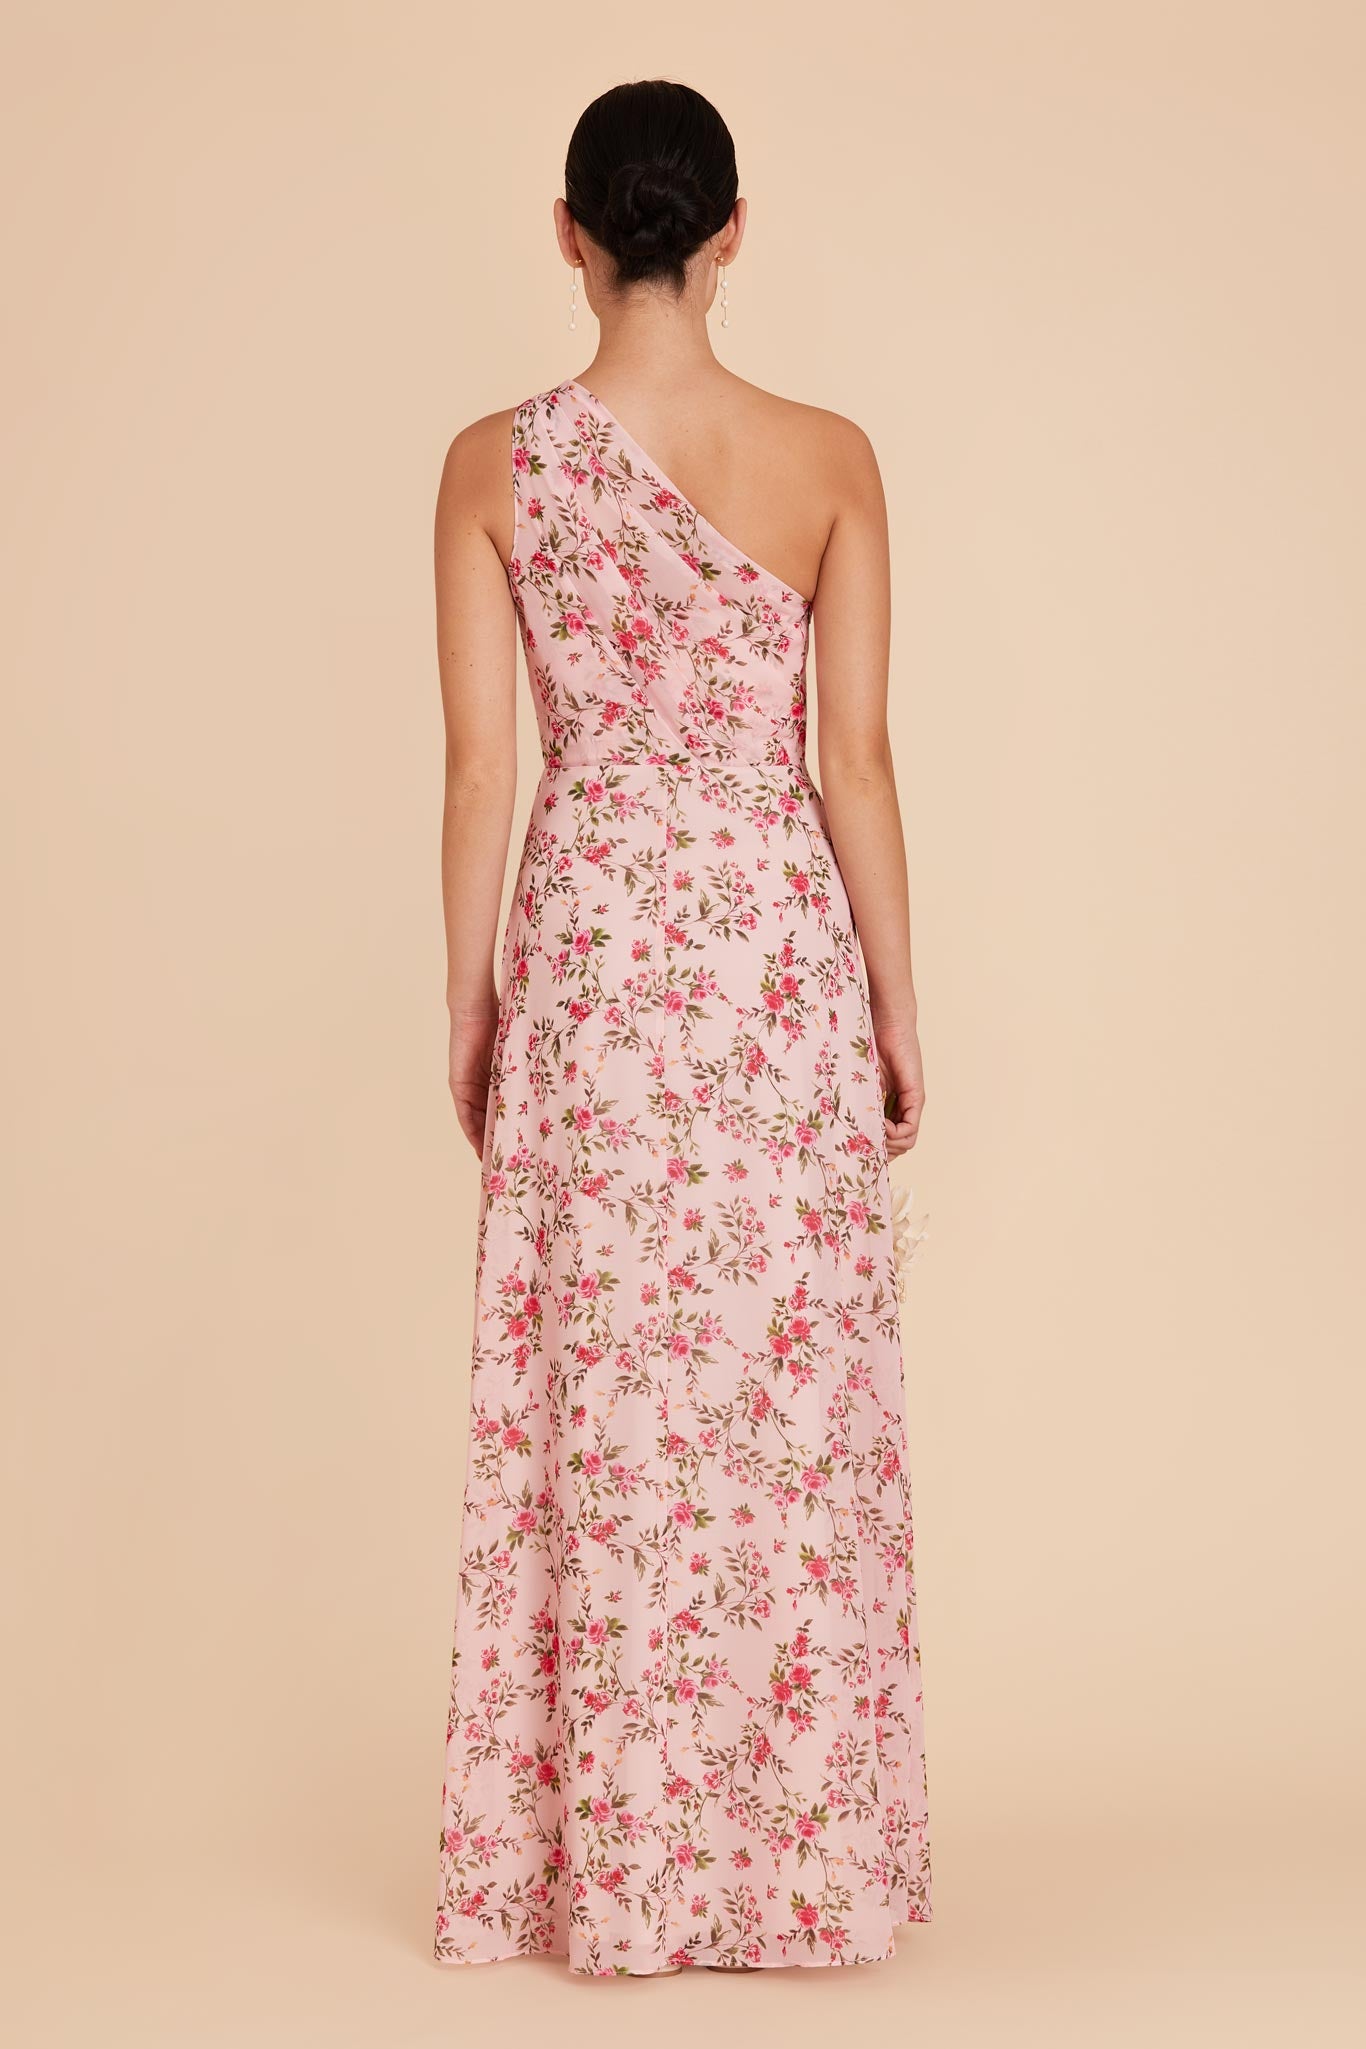 Wild Rose Garden Kira Chiffon Dress by Birdy Grey